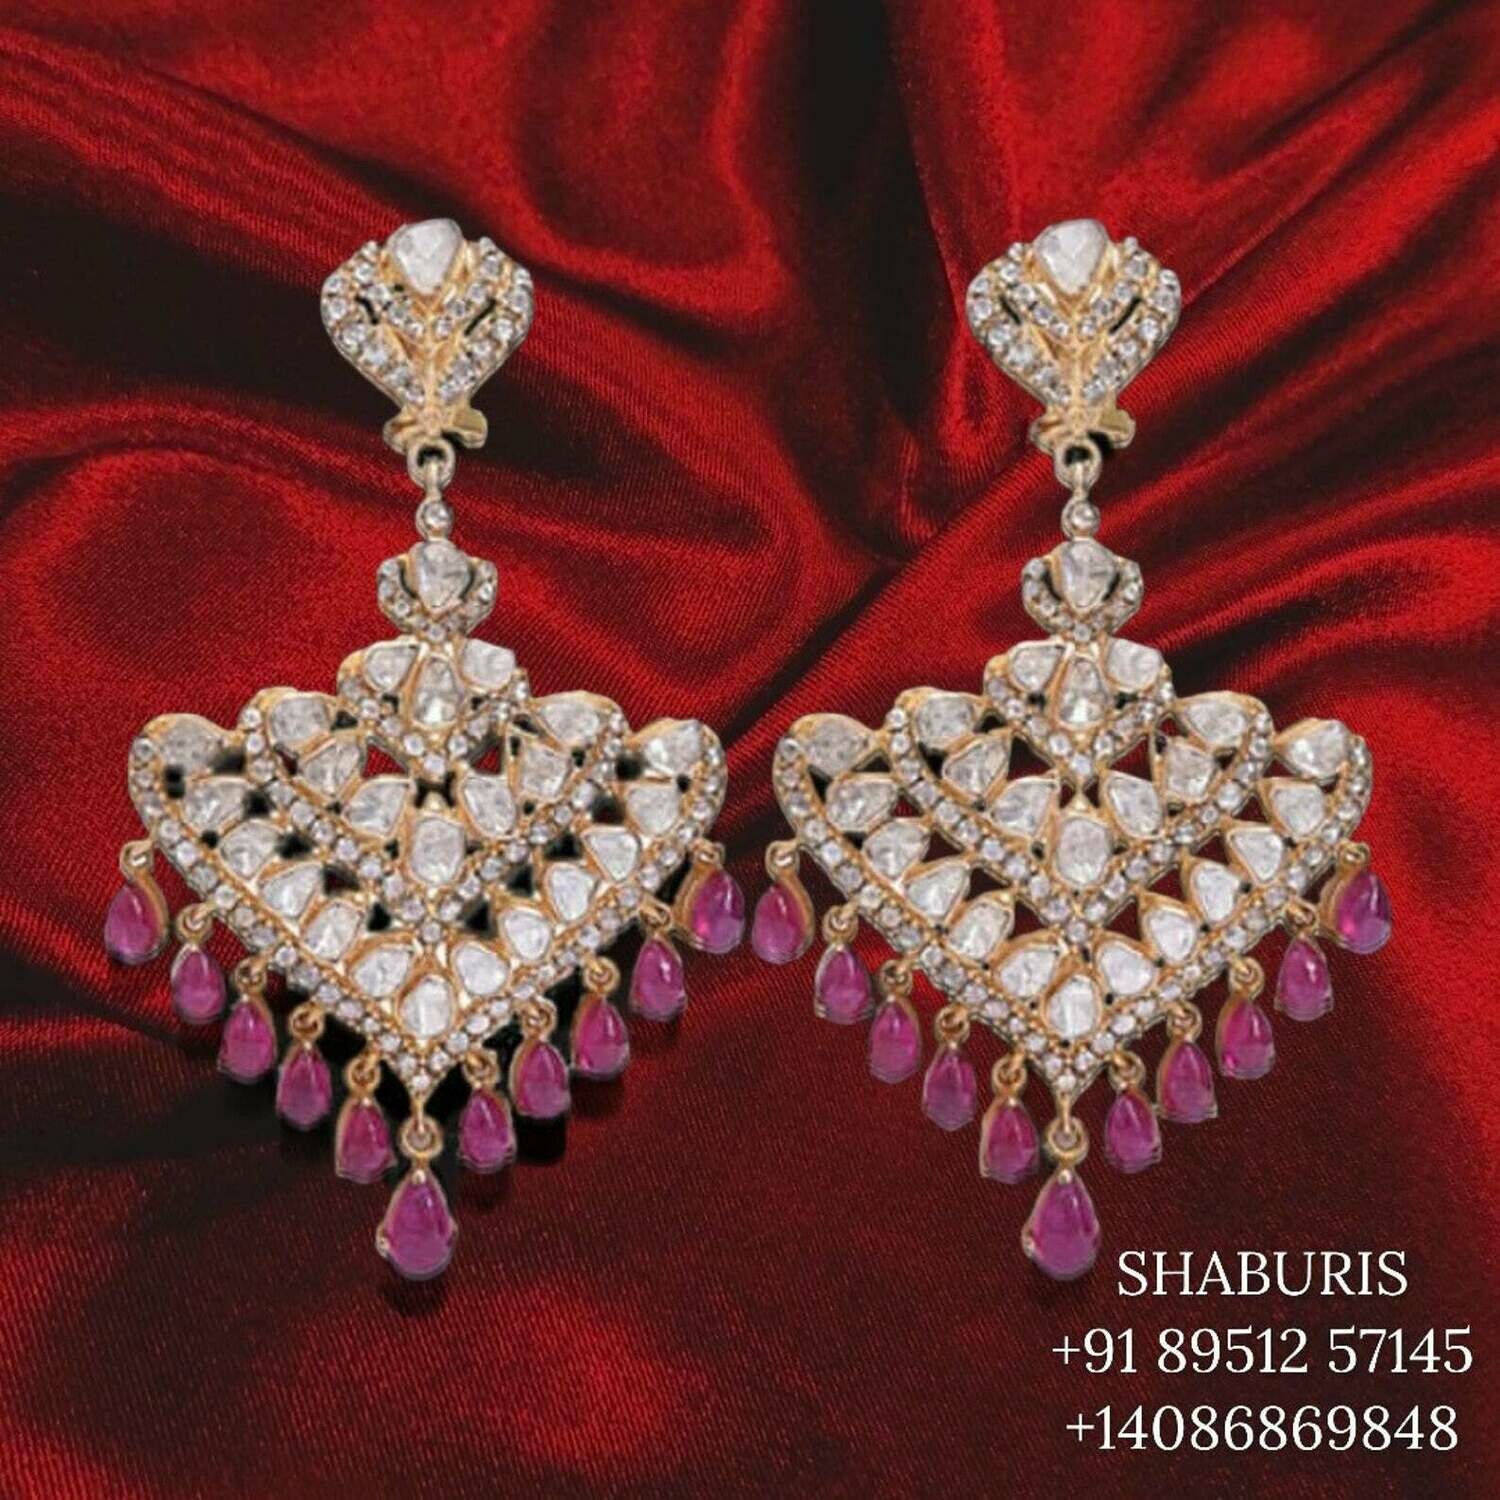 Polki jhumkas Pure Silver jewelry Indian ,diamond earrings ,Indian gold jewelry designs diamond jewelry look a like - SHABURIS